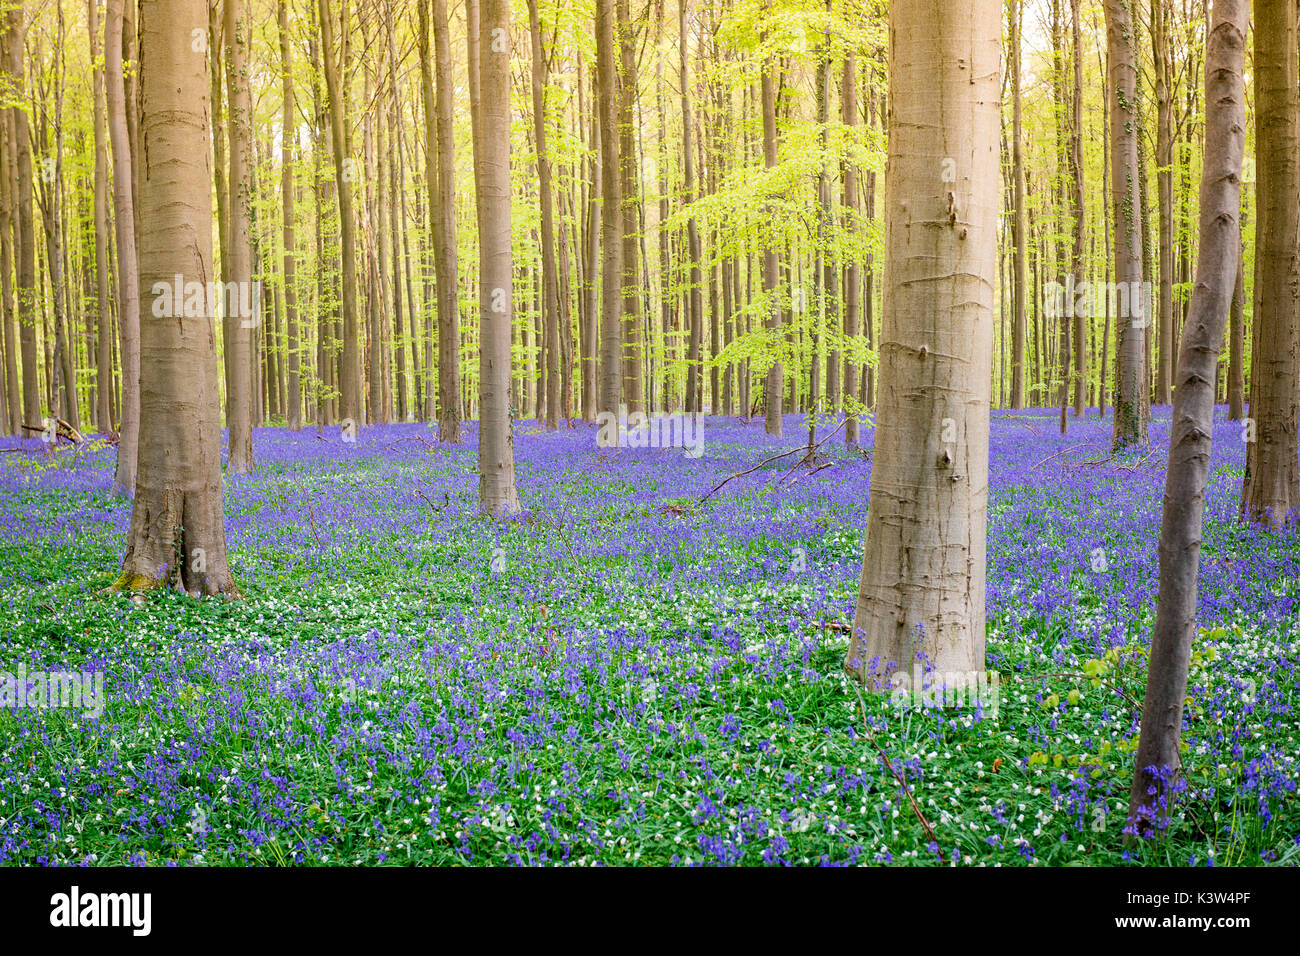 Hallerbos, beech forest in Belgium full of blue bells flowers. Stock Photo